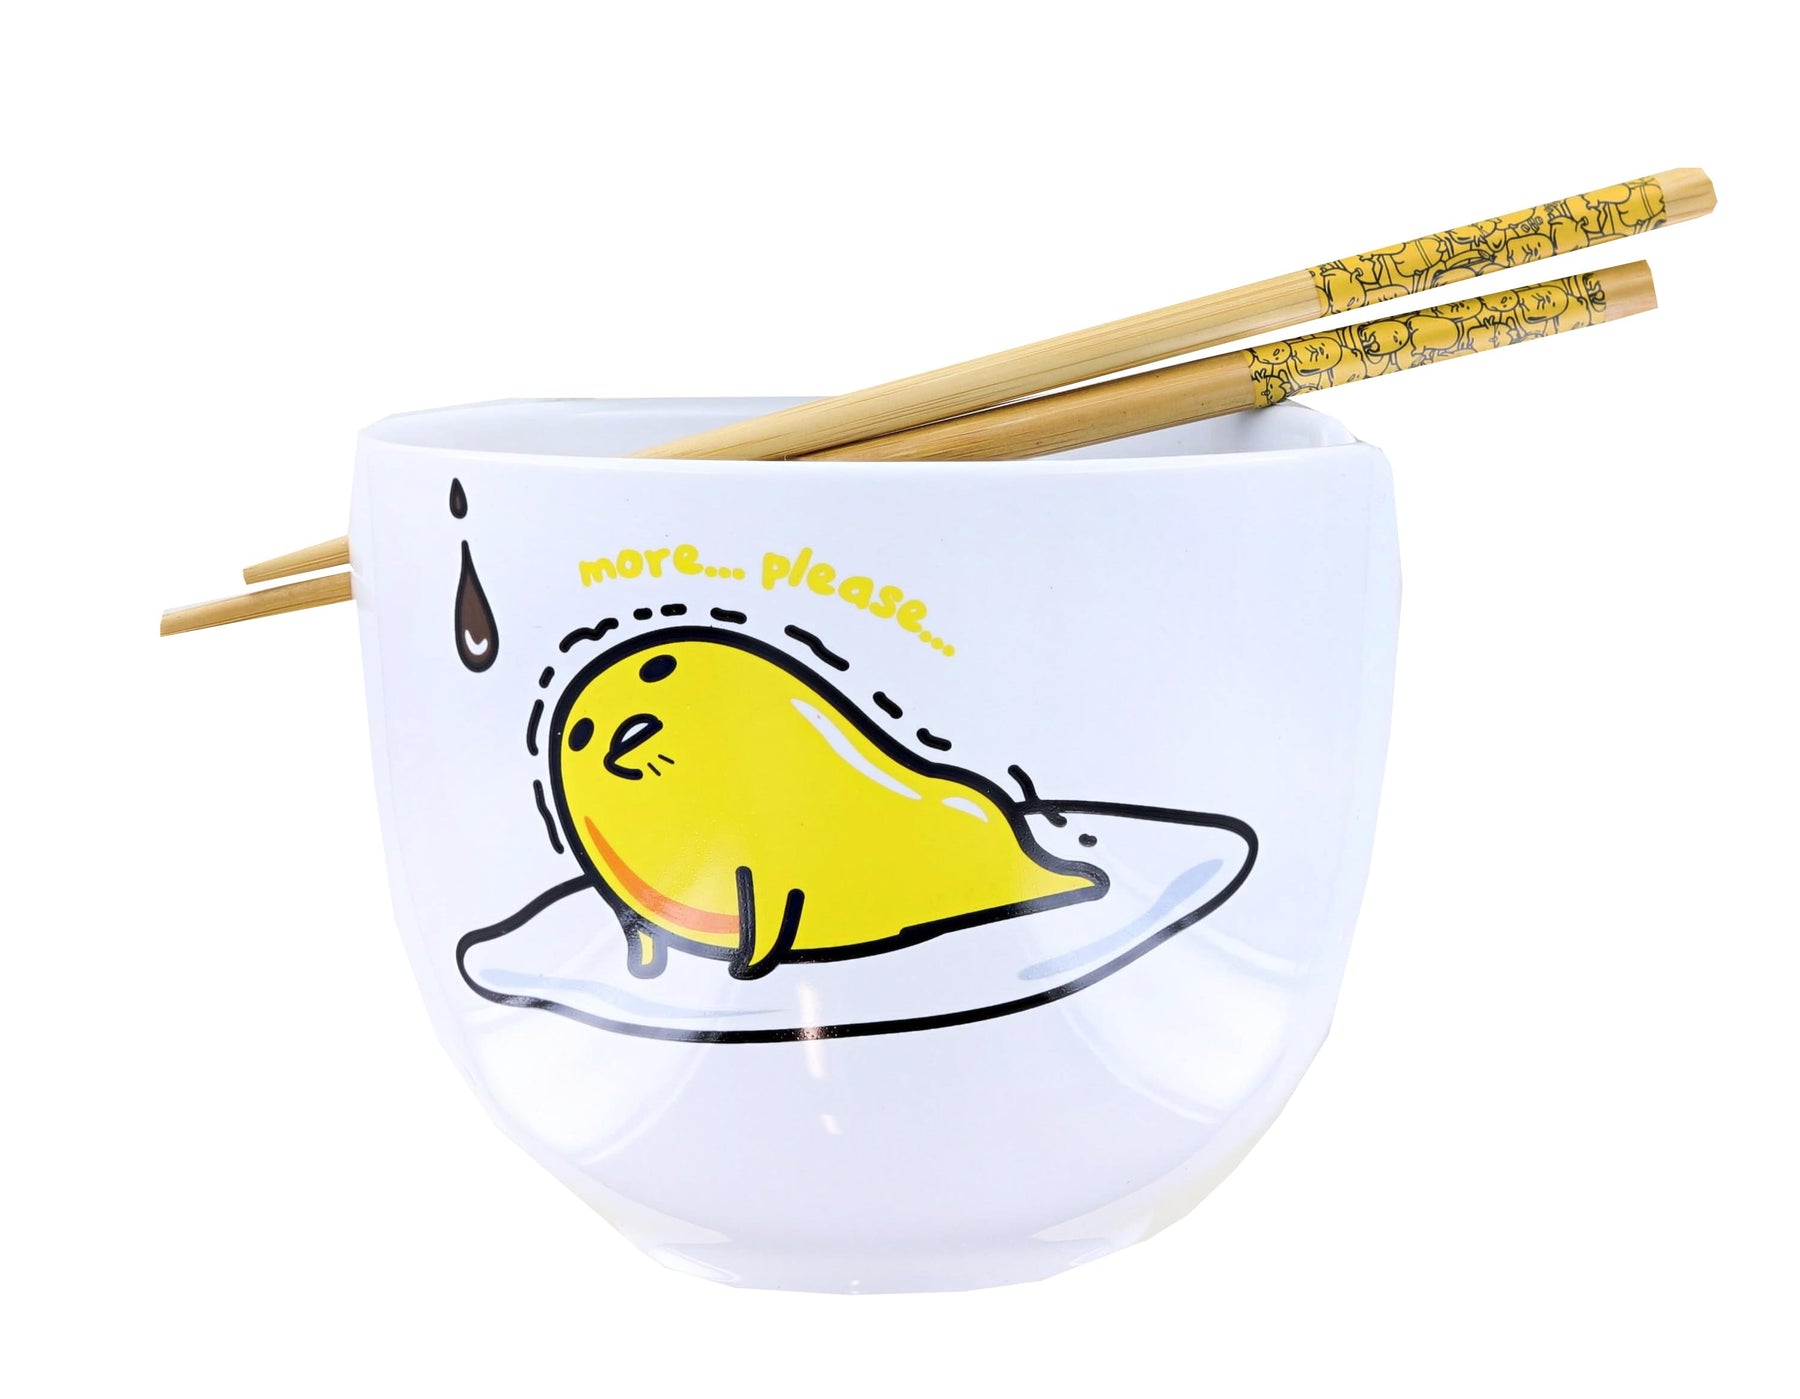 Sanrio Gudetama Top Ramen More Please 20oz Ceramic Ramen Bowl with Chopsticks